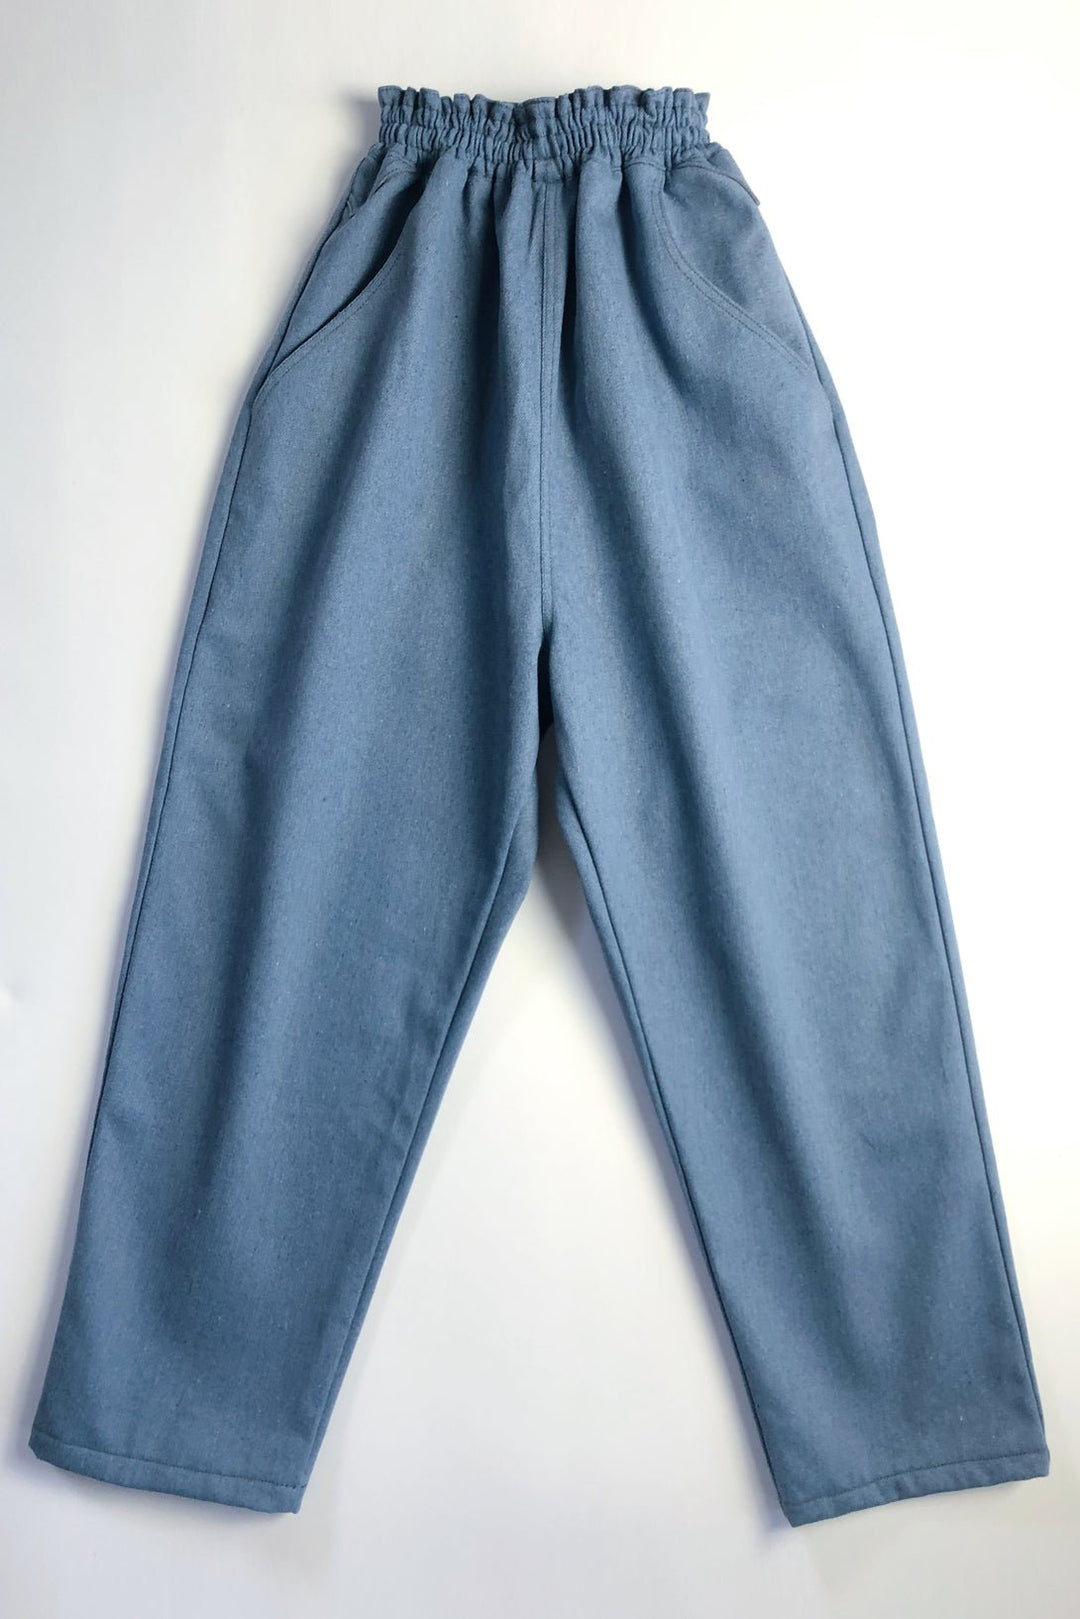 Unisex recycled denim trouser – Over All 1516